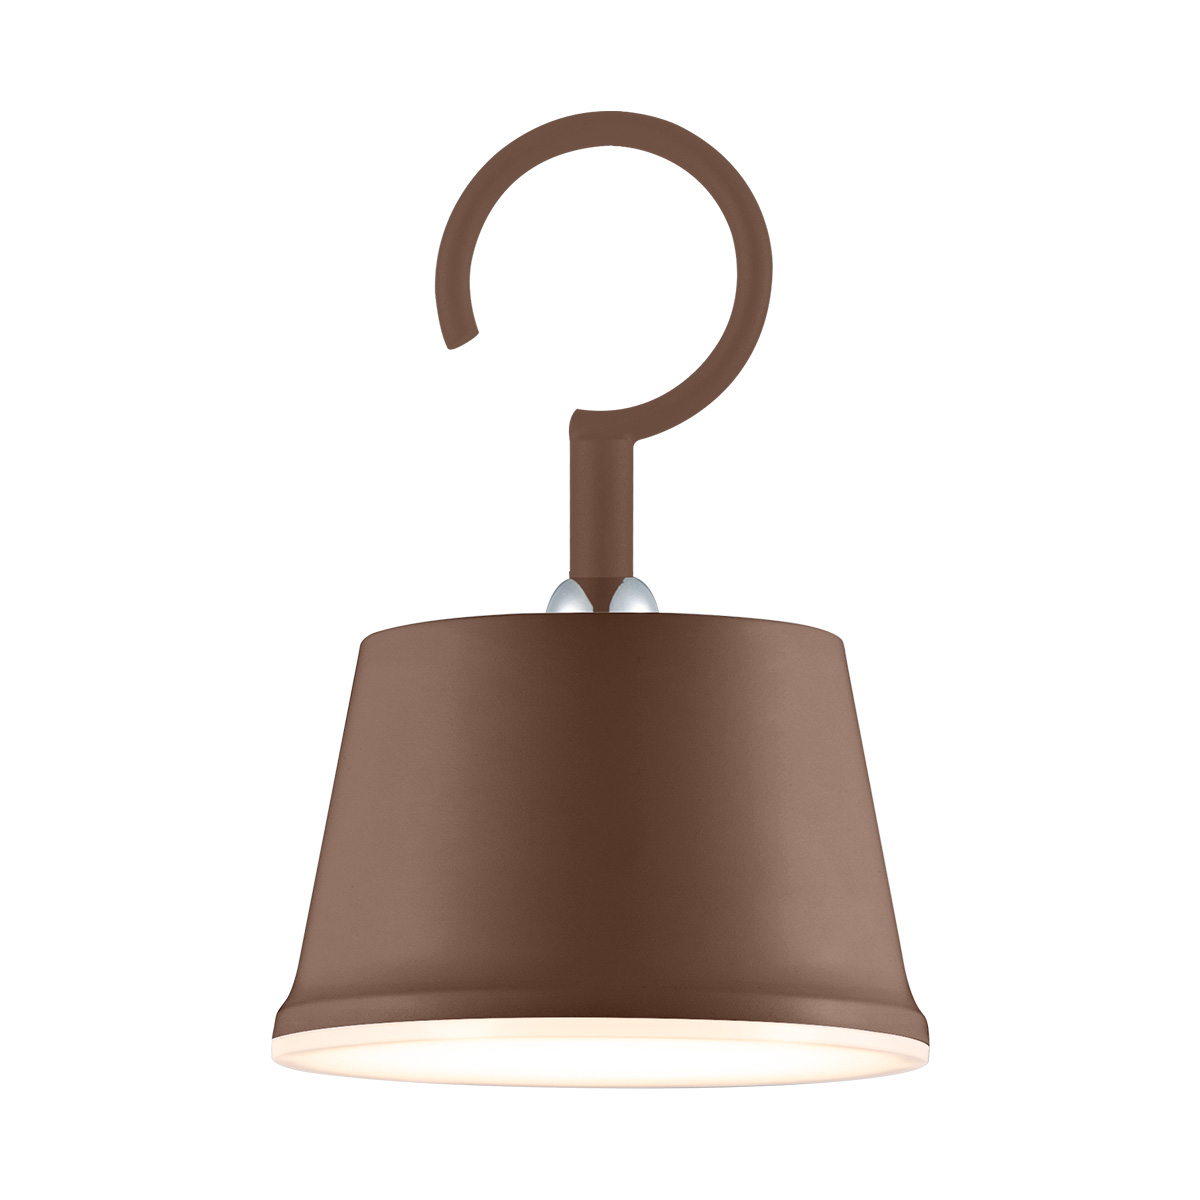 Tangla lighting - TLP7644-01BW - LED Pendant lamp - rechargeable plastic and metal in brown - mini LED pendant